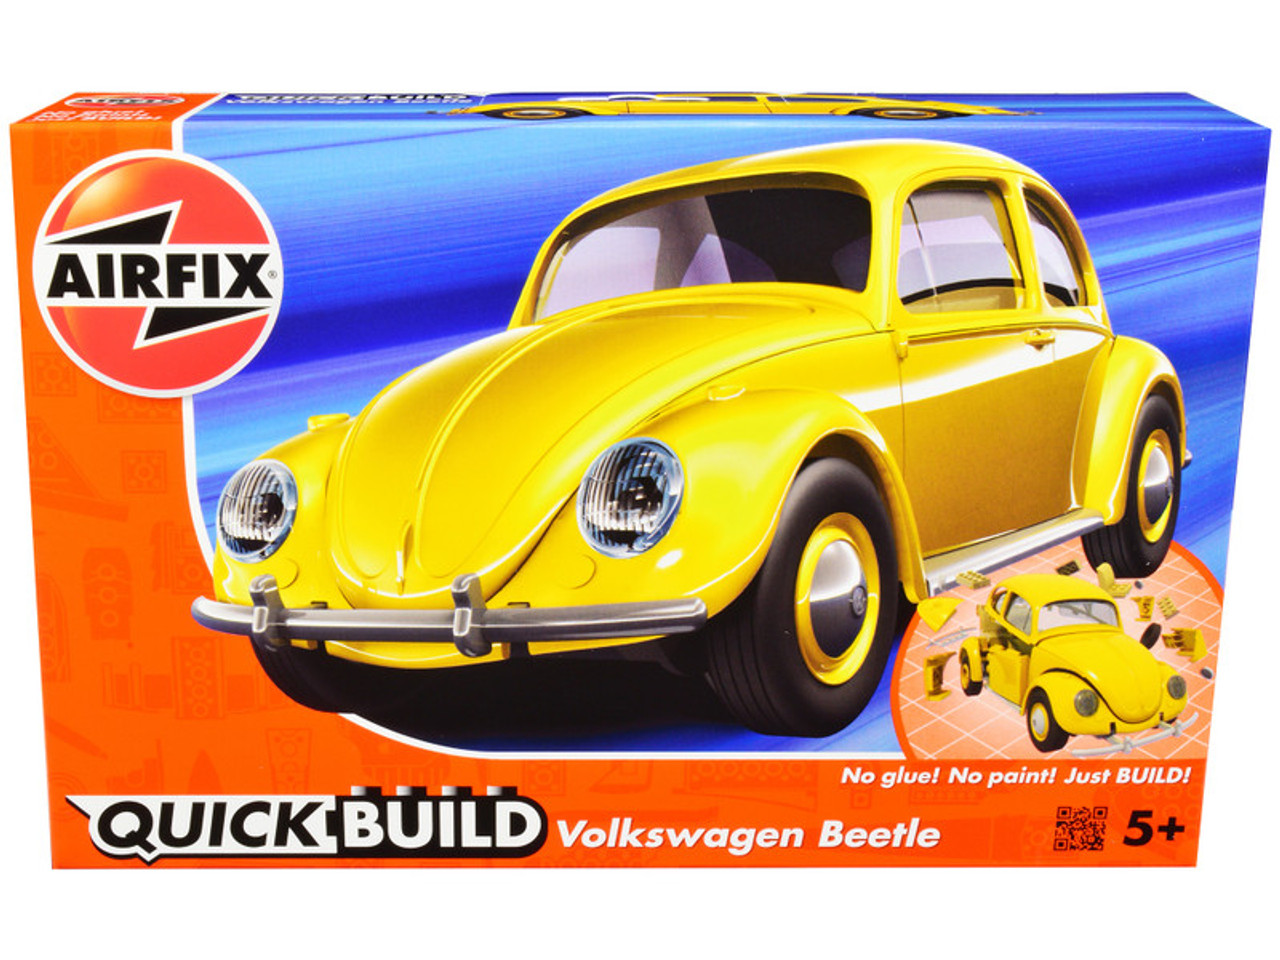 Airfix J6023 Quickbuild VW Beetle - Yellow